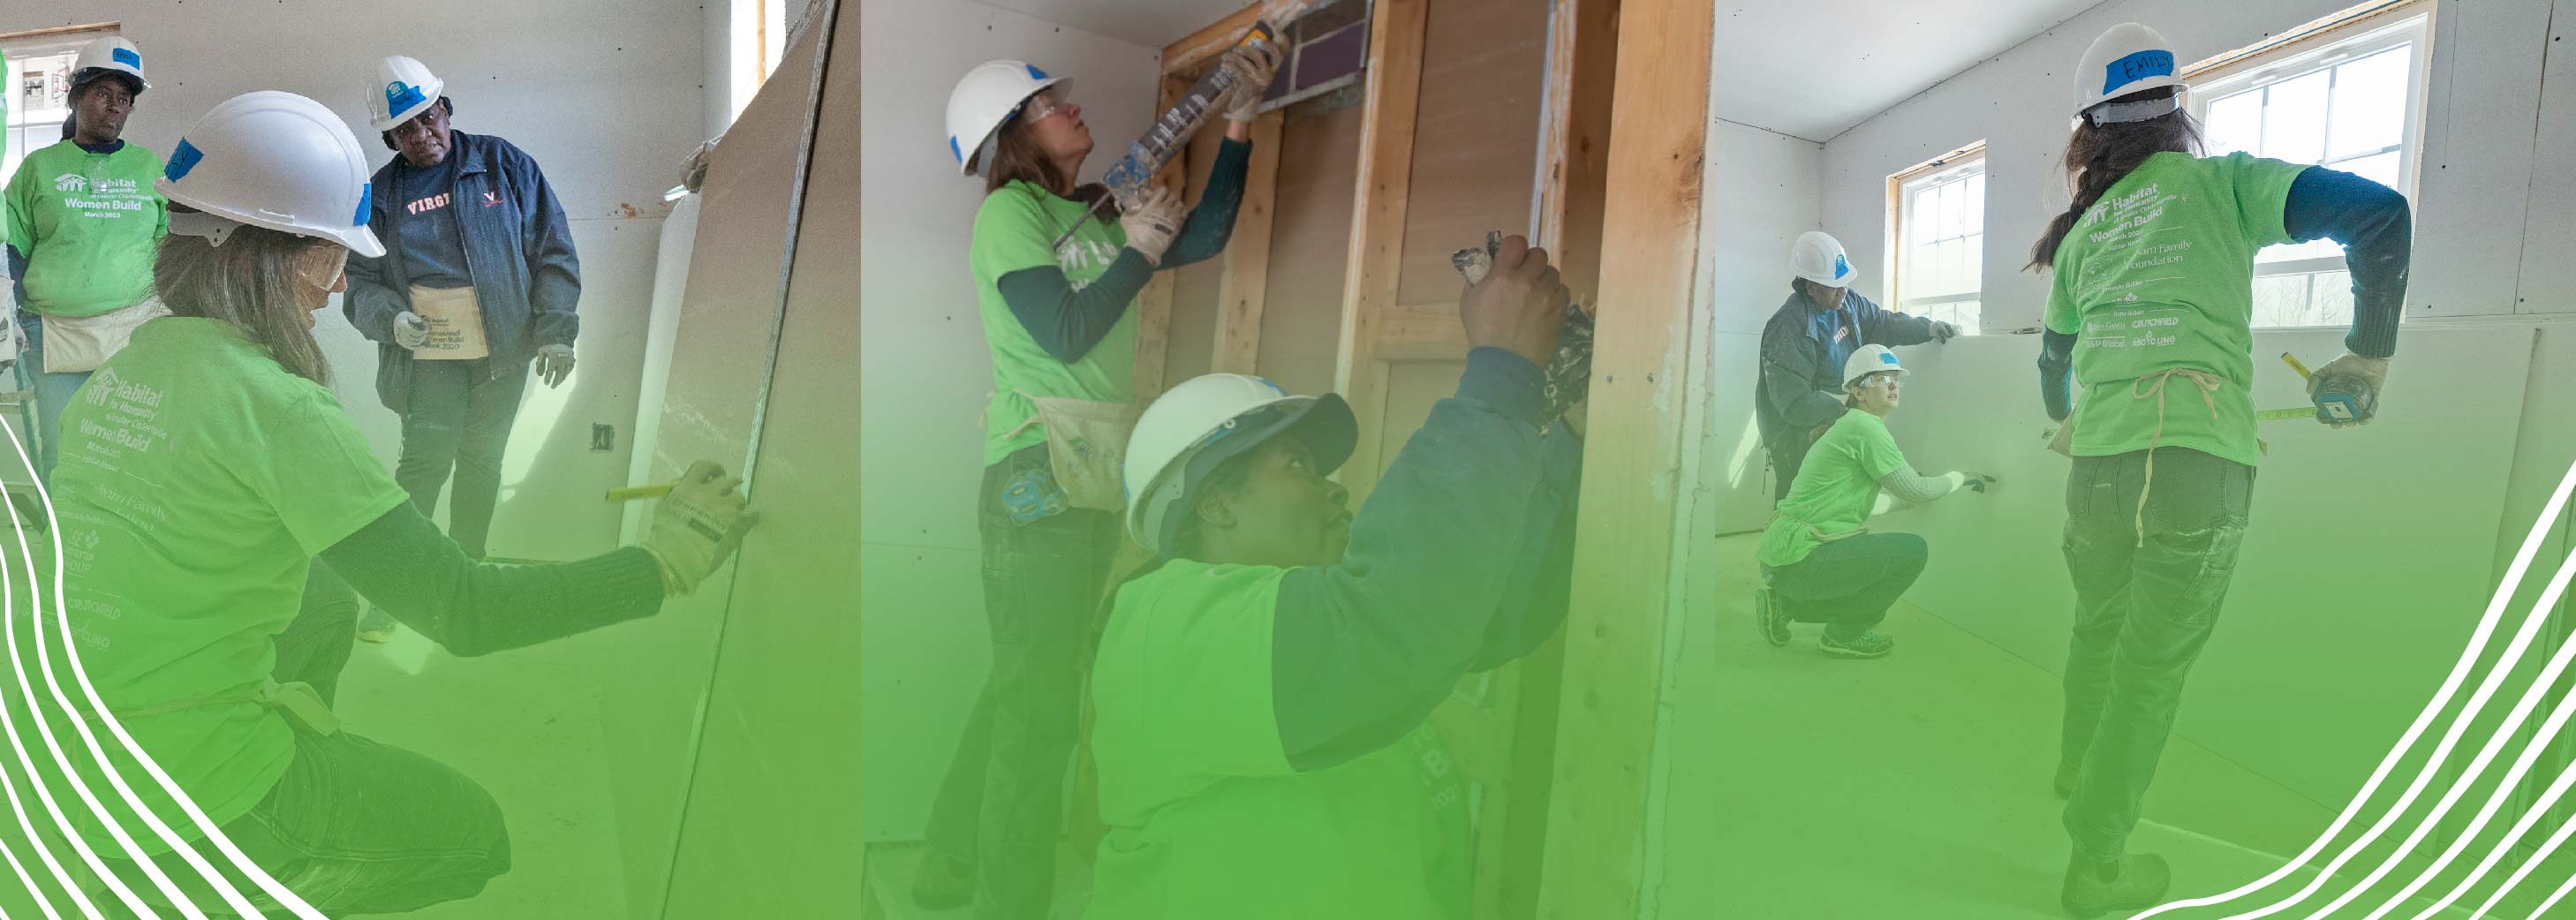 Three photos of women volunteers doing interior construction tasks